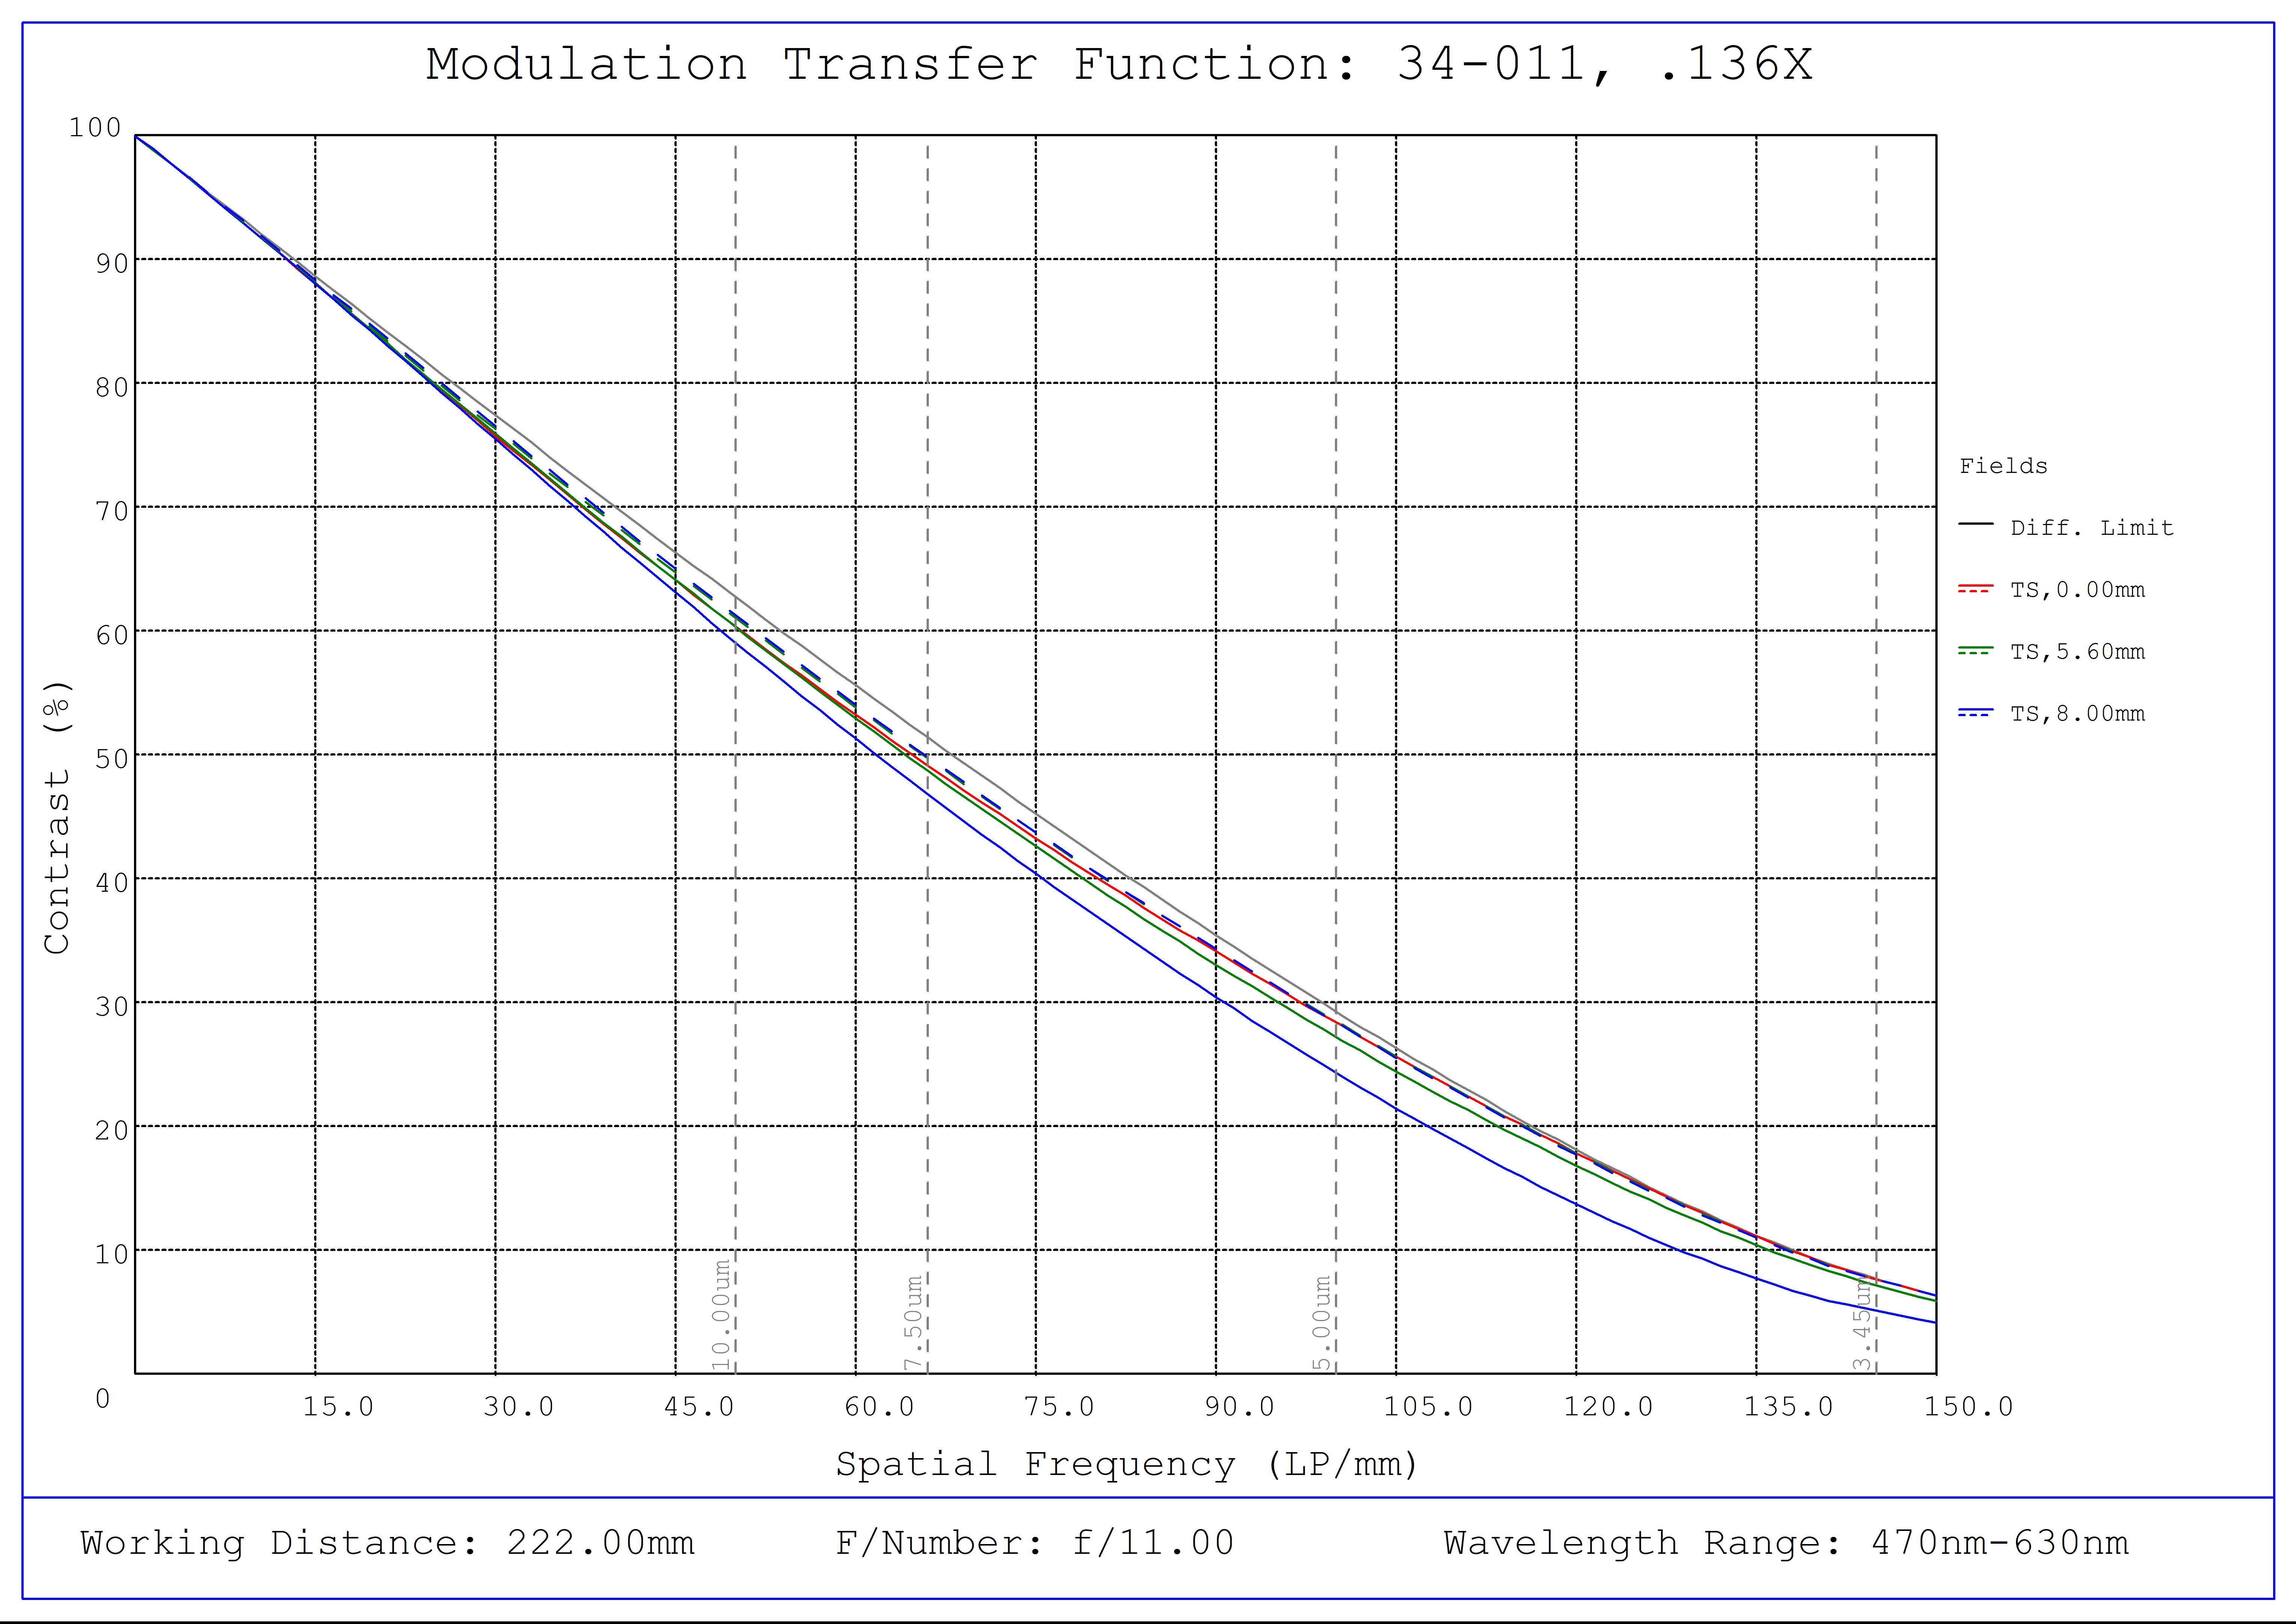 #34-011, 0.136X, 1" C-Mount TitanTL® Telecentric Lens, Modulated Transfer Function (MTF) Plot, 222mm Working Distance, f11